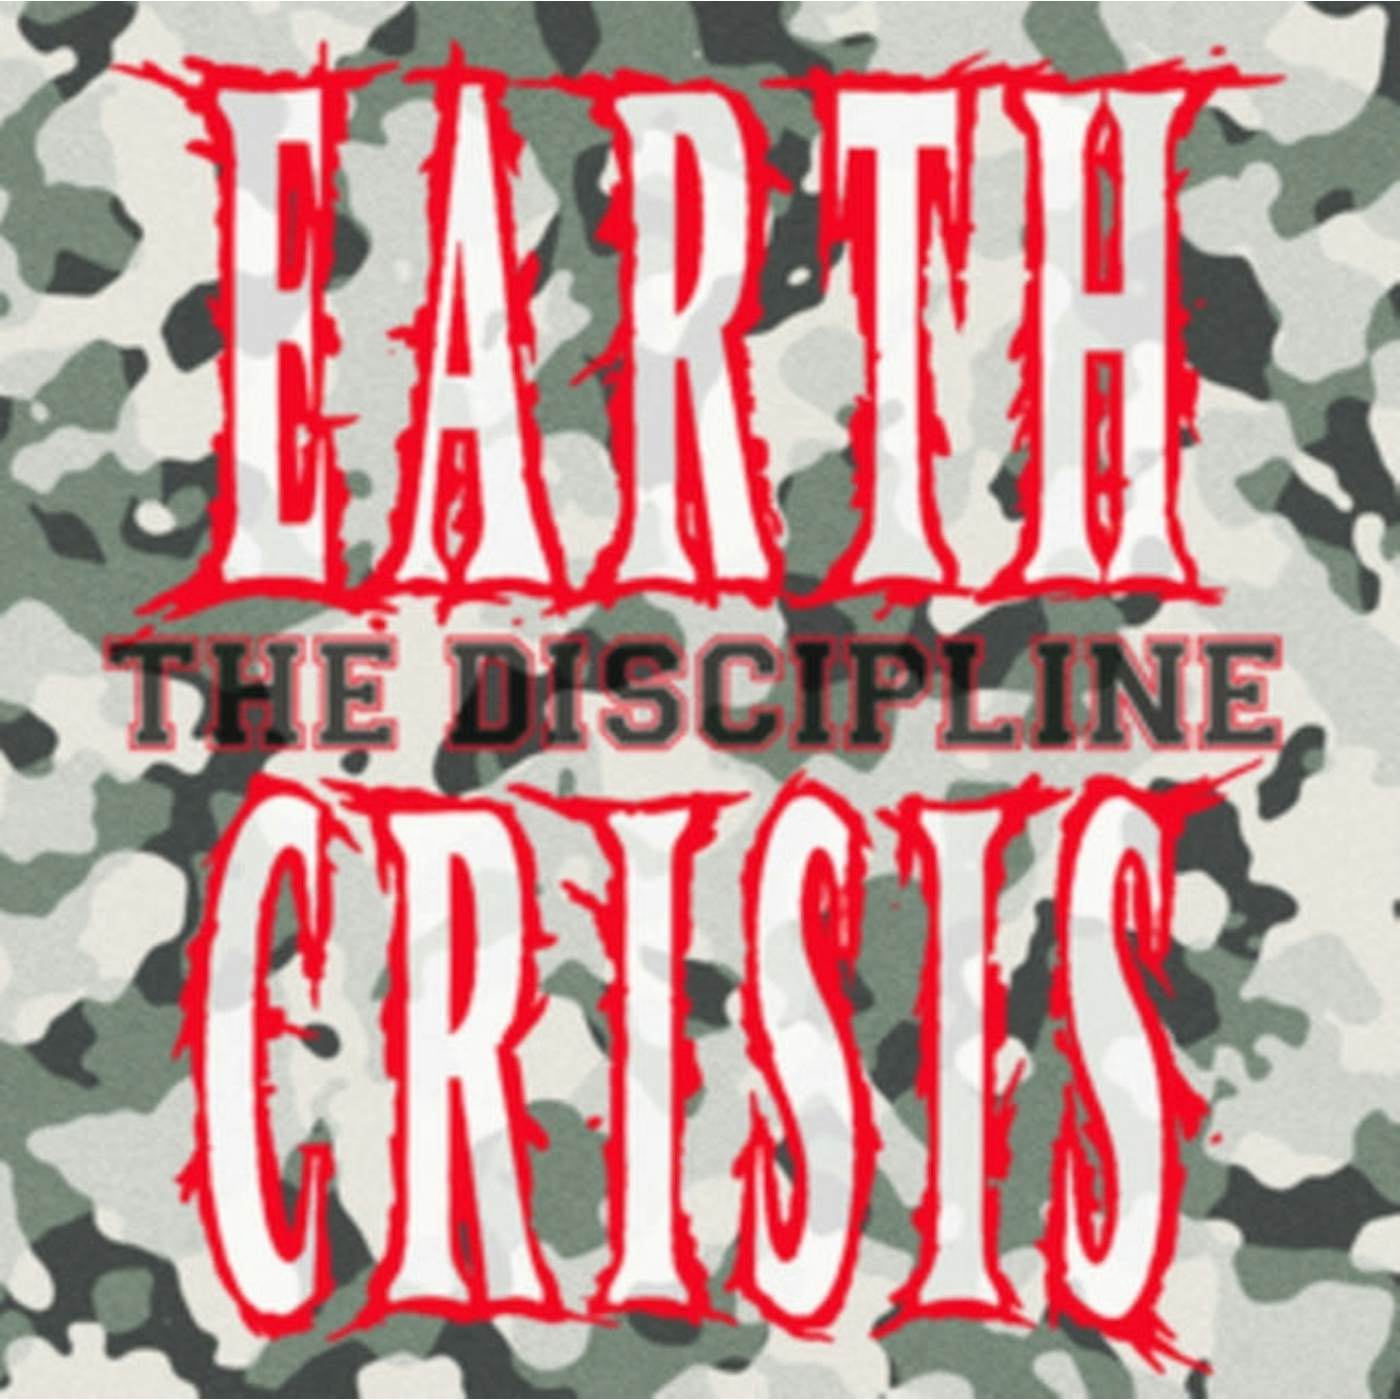 Earth Crisis CD - The Discipline